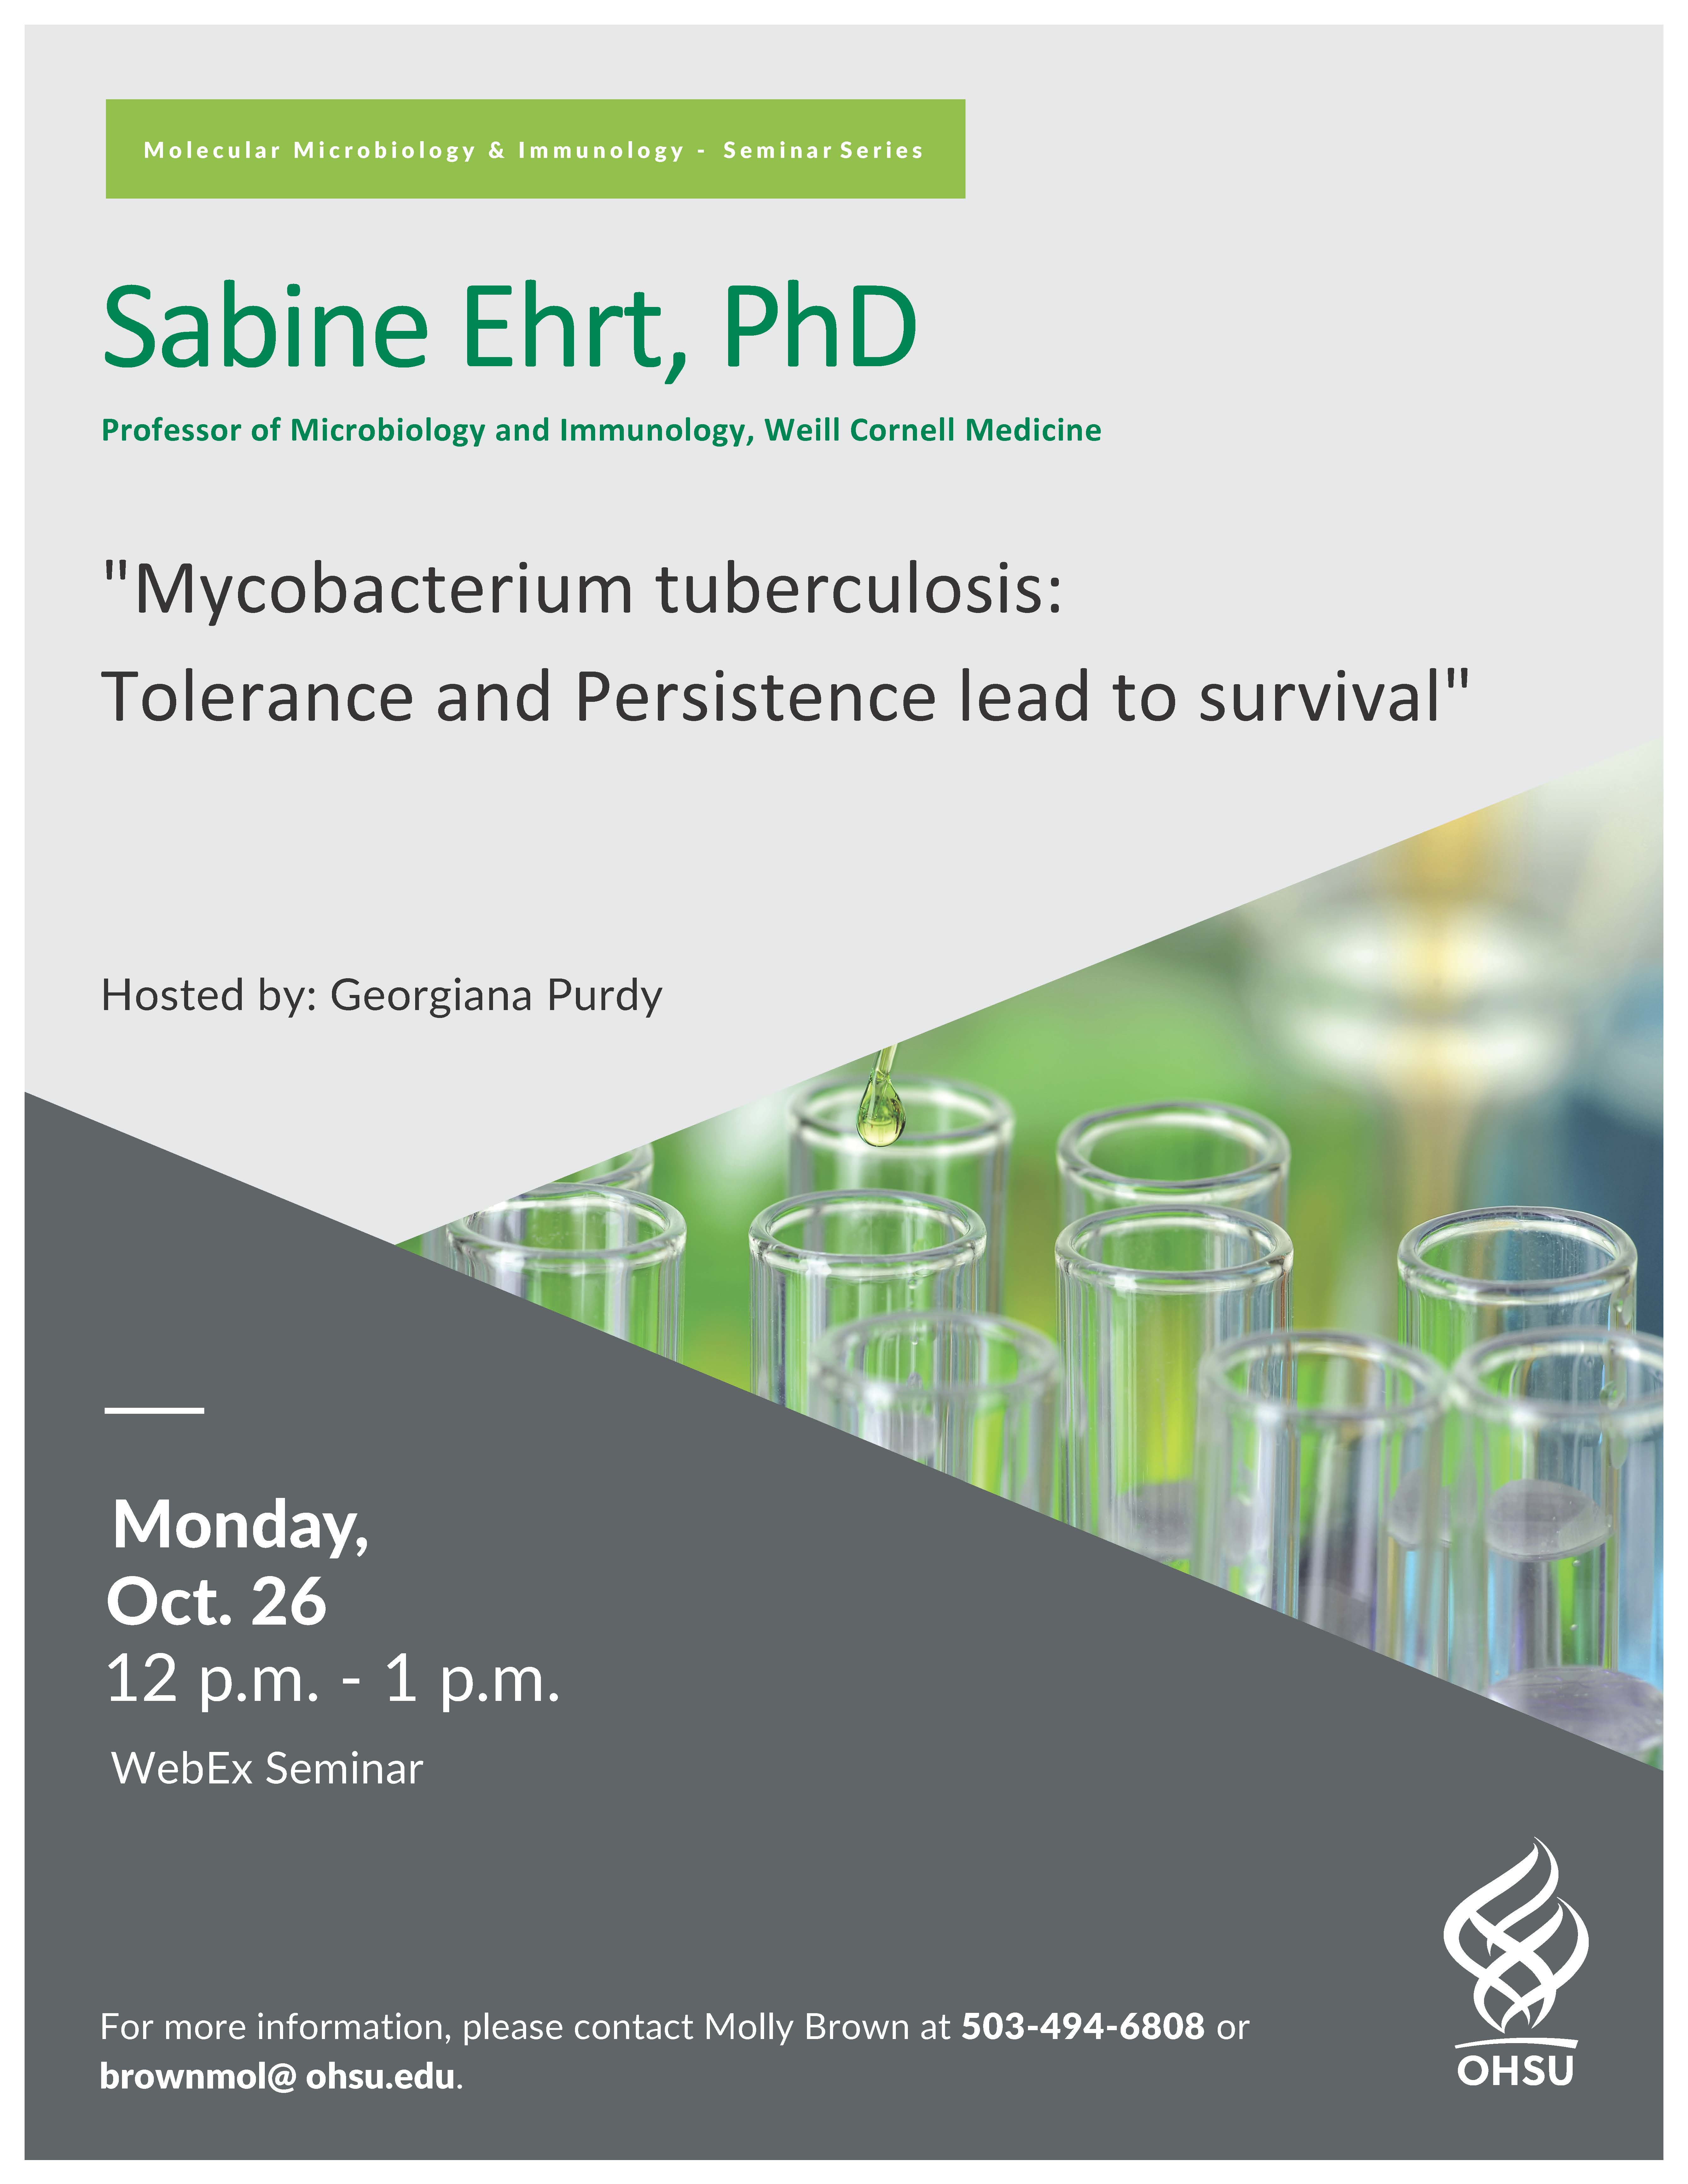 MMI Seminar - Dr. Sabine Ehrt 10.26.20